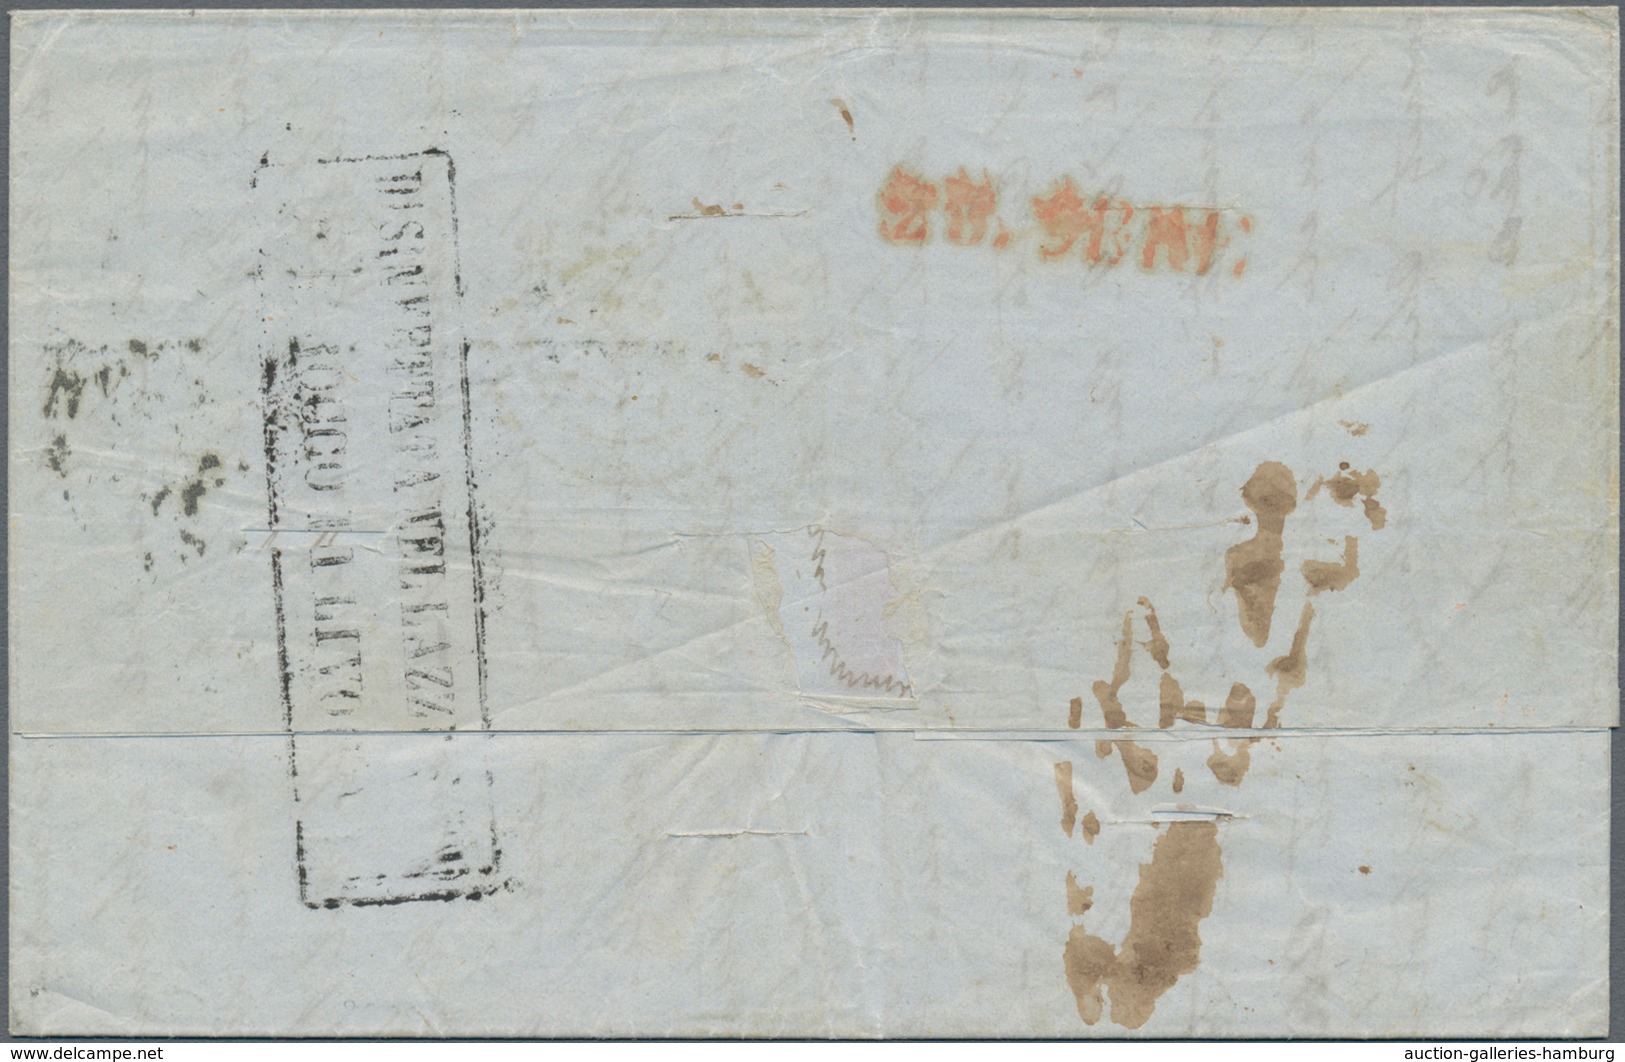 Malta - Vorphilatelie: 1847, Entire Letter From Malta, Dated Nov.18th 1847, Forwarded By "Rodocanacc - Malta